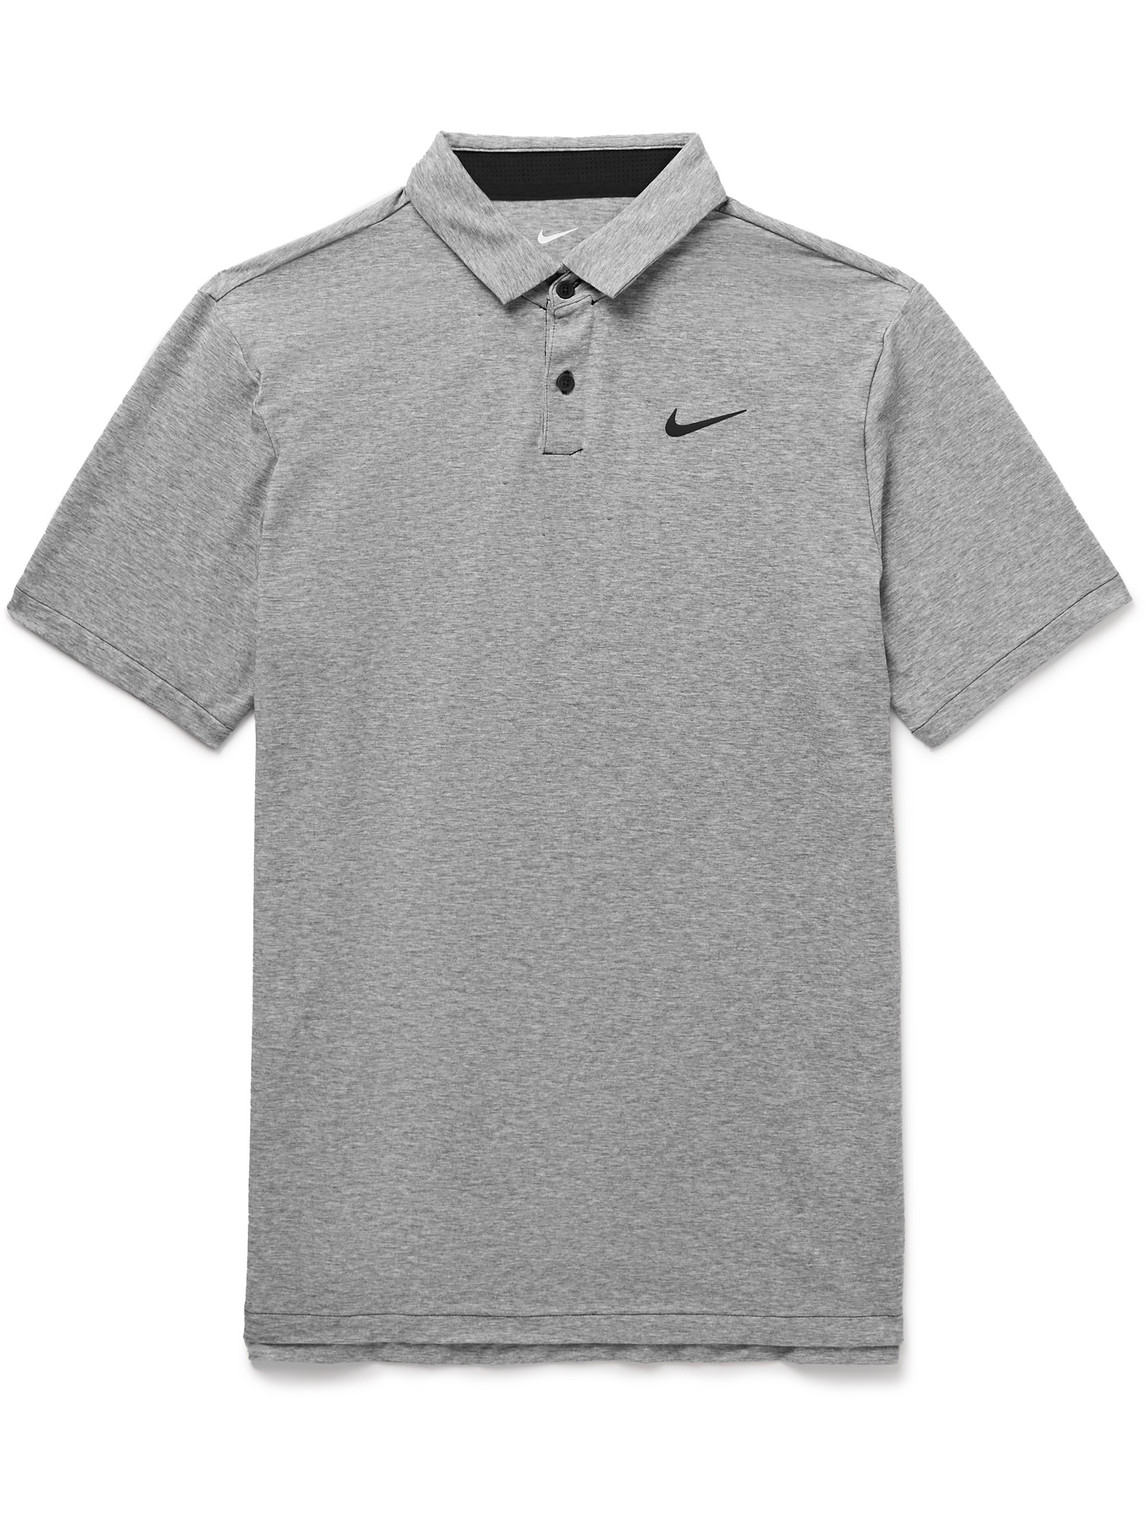 Nike Tour Dri-fit Golf Polo Shirt In Gray